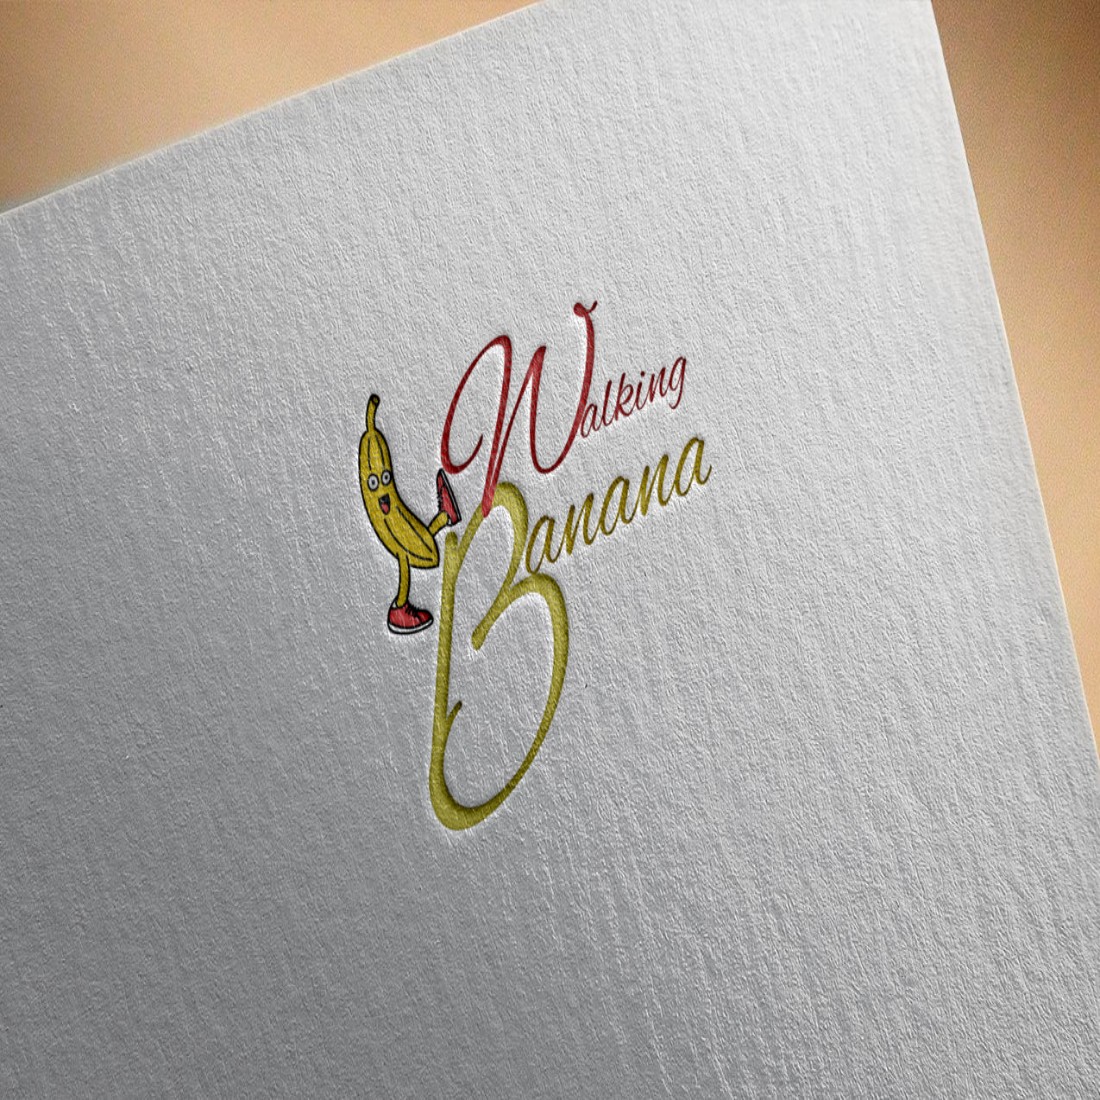 Walking Banana Logo Mockup on Paper Design cover image.